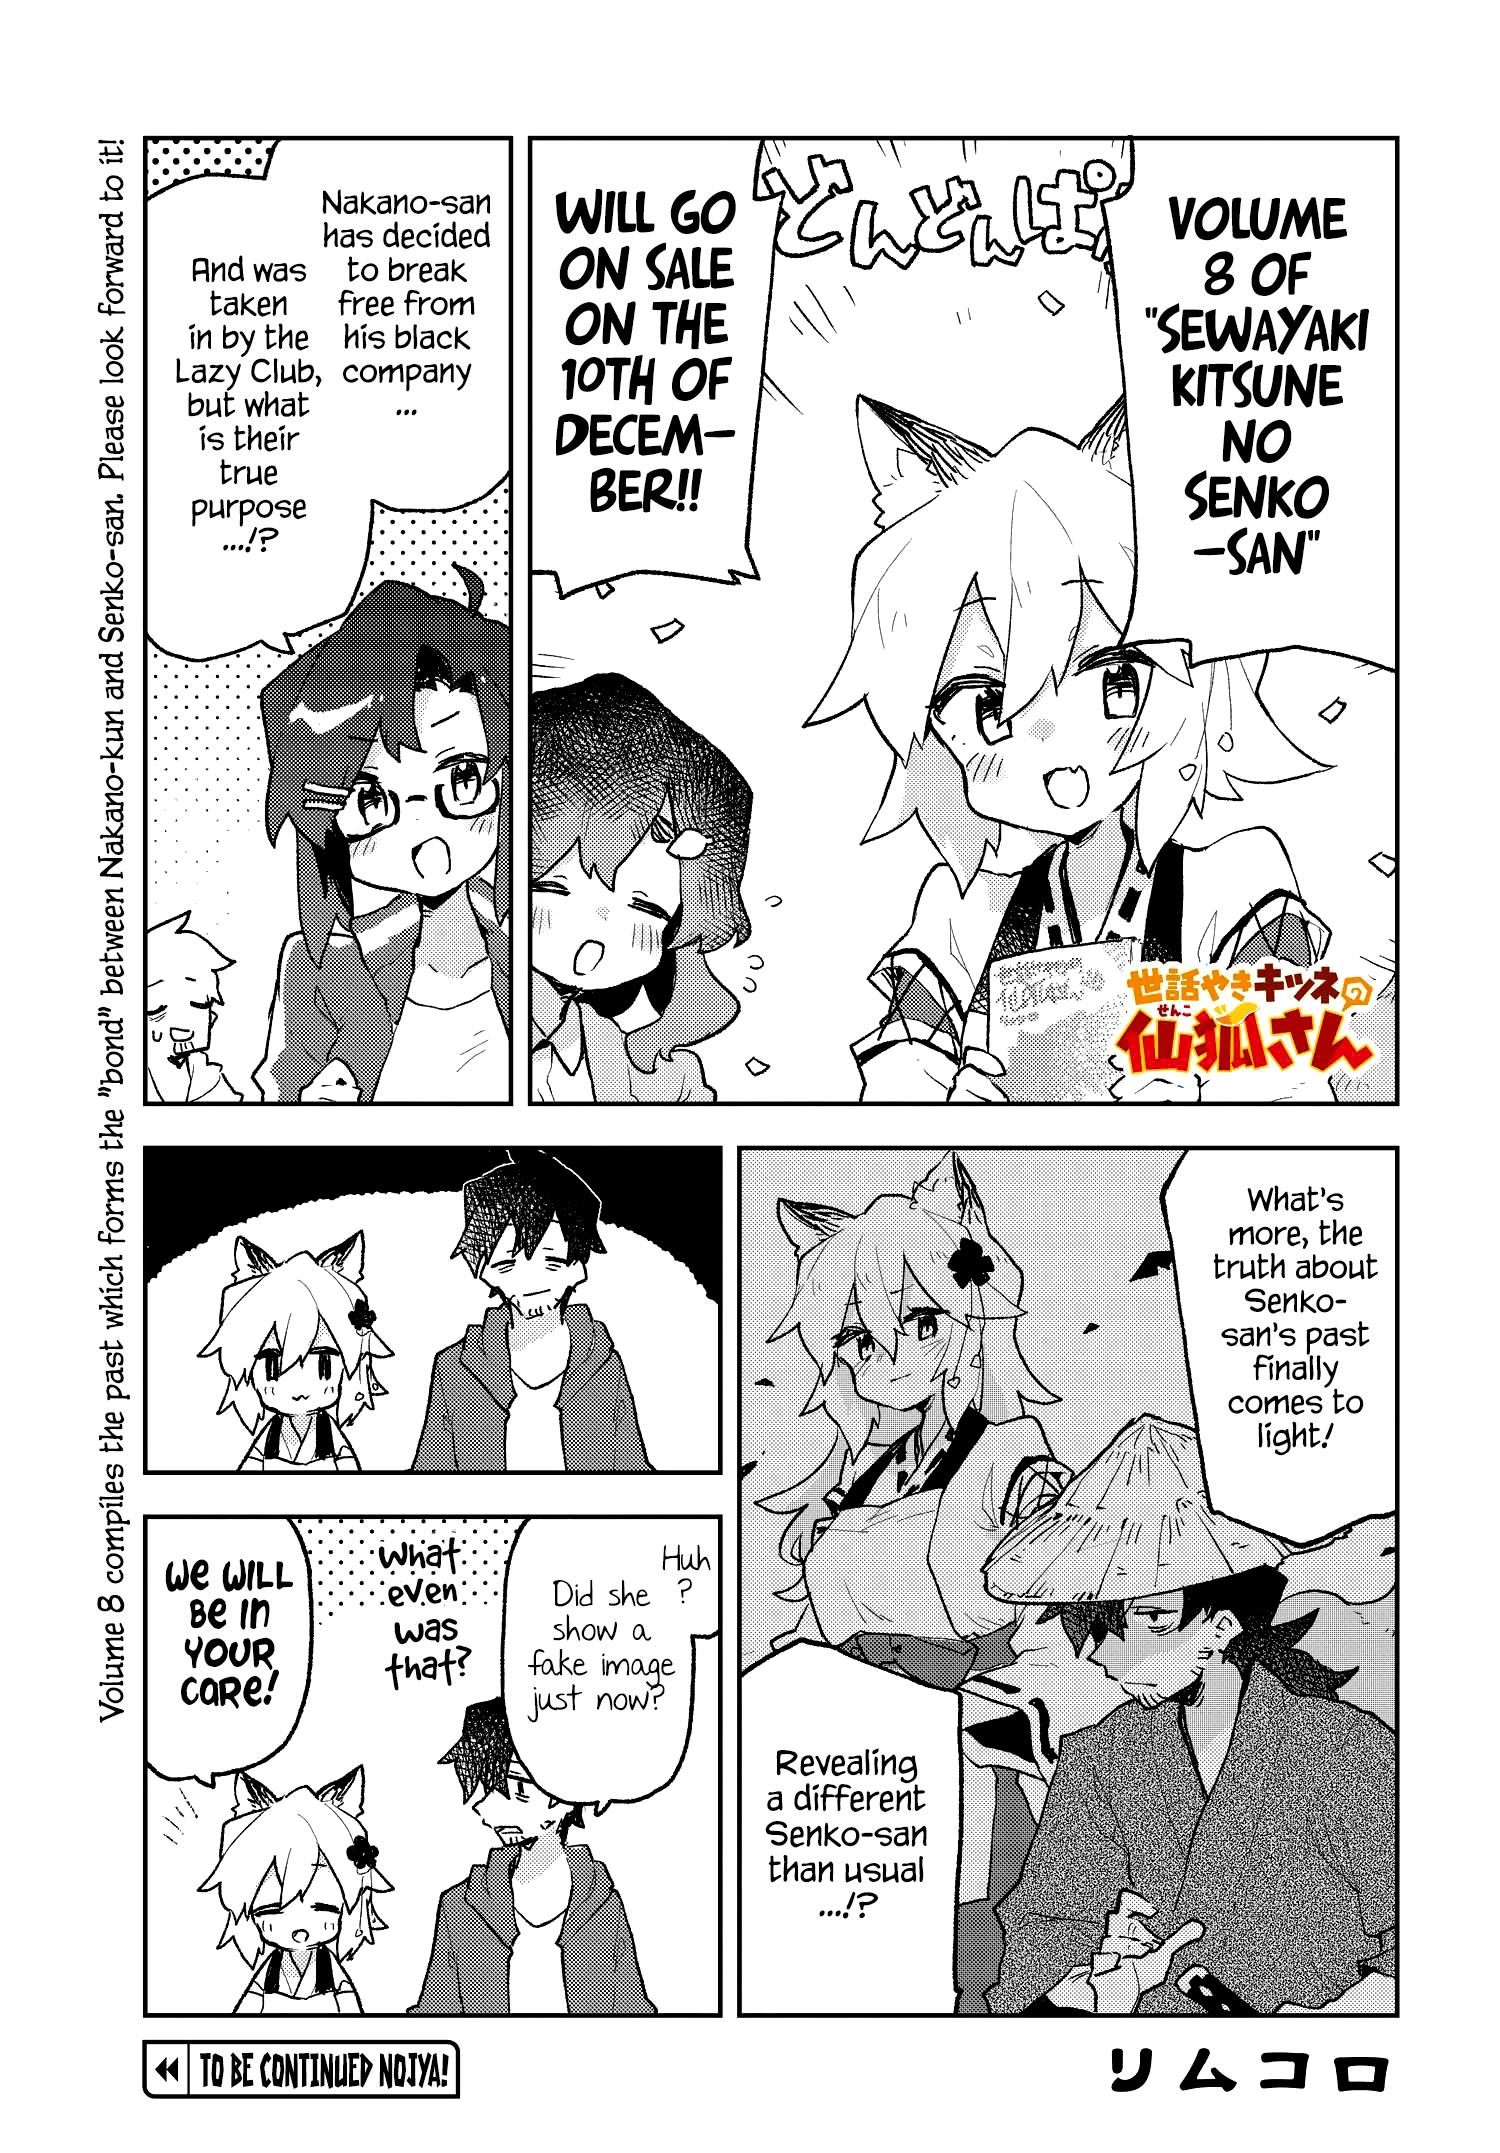 Sewayaki Kitsune No Senko-San Vol.8 Chapter 61.4: Volume 8 Announcement page 1 - Mangakakalot